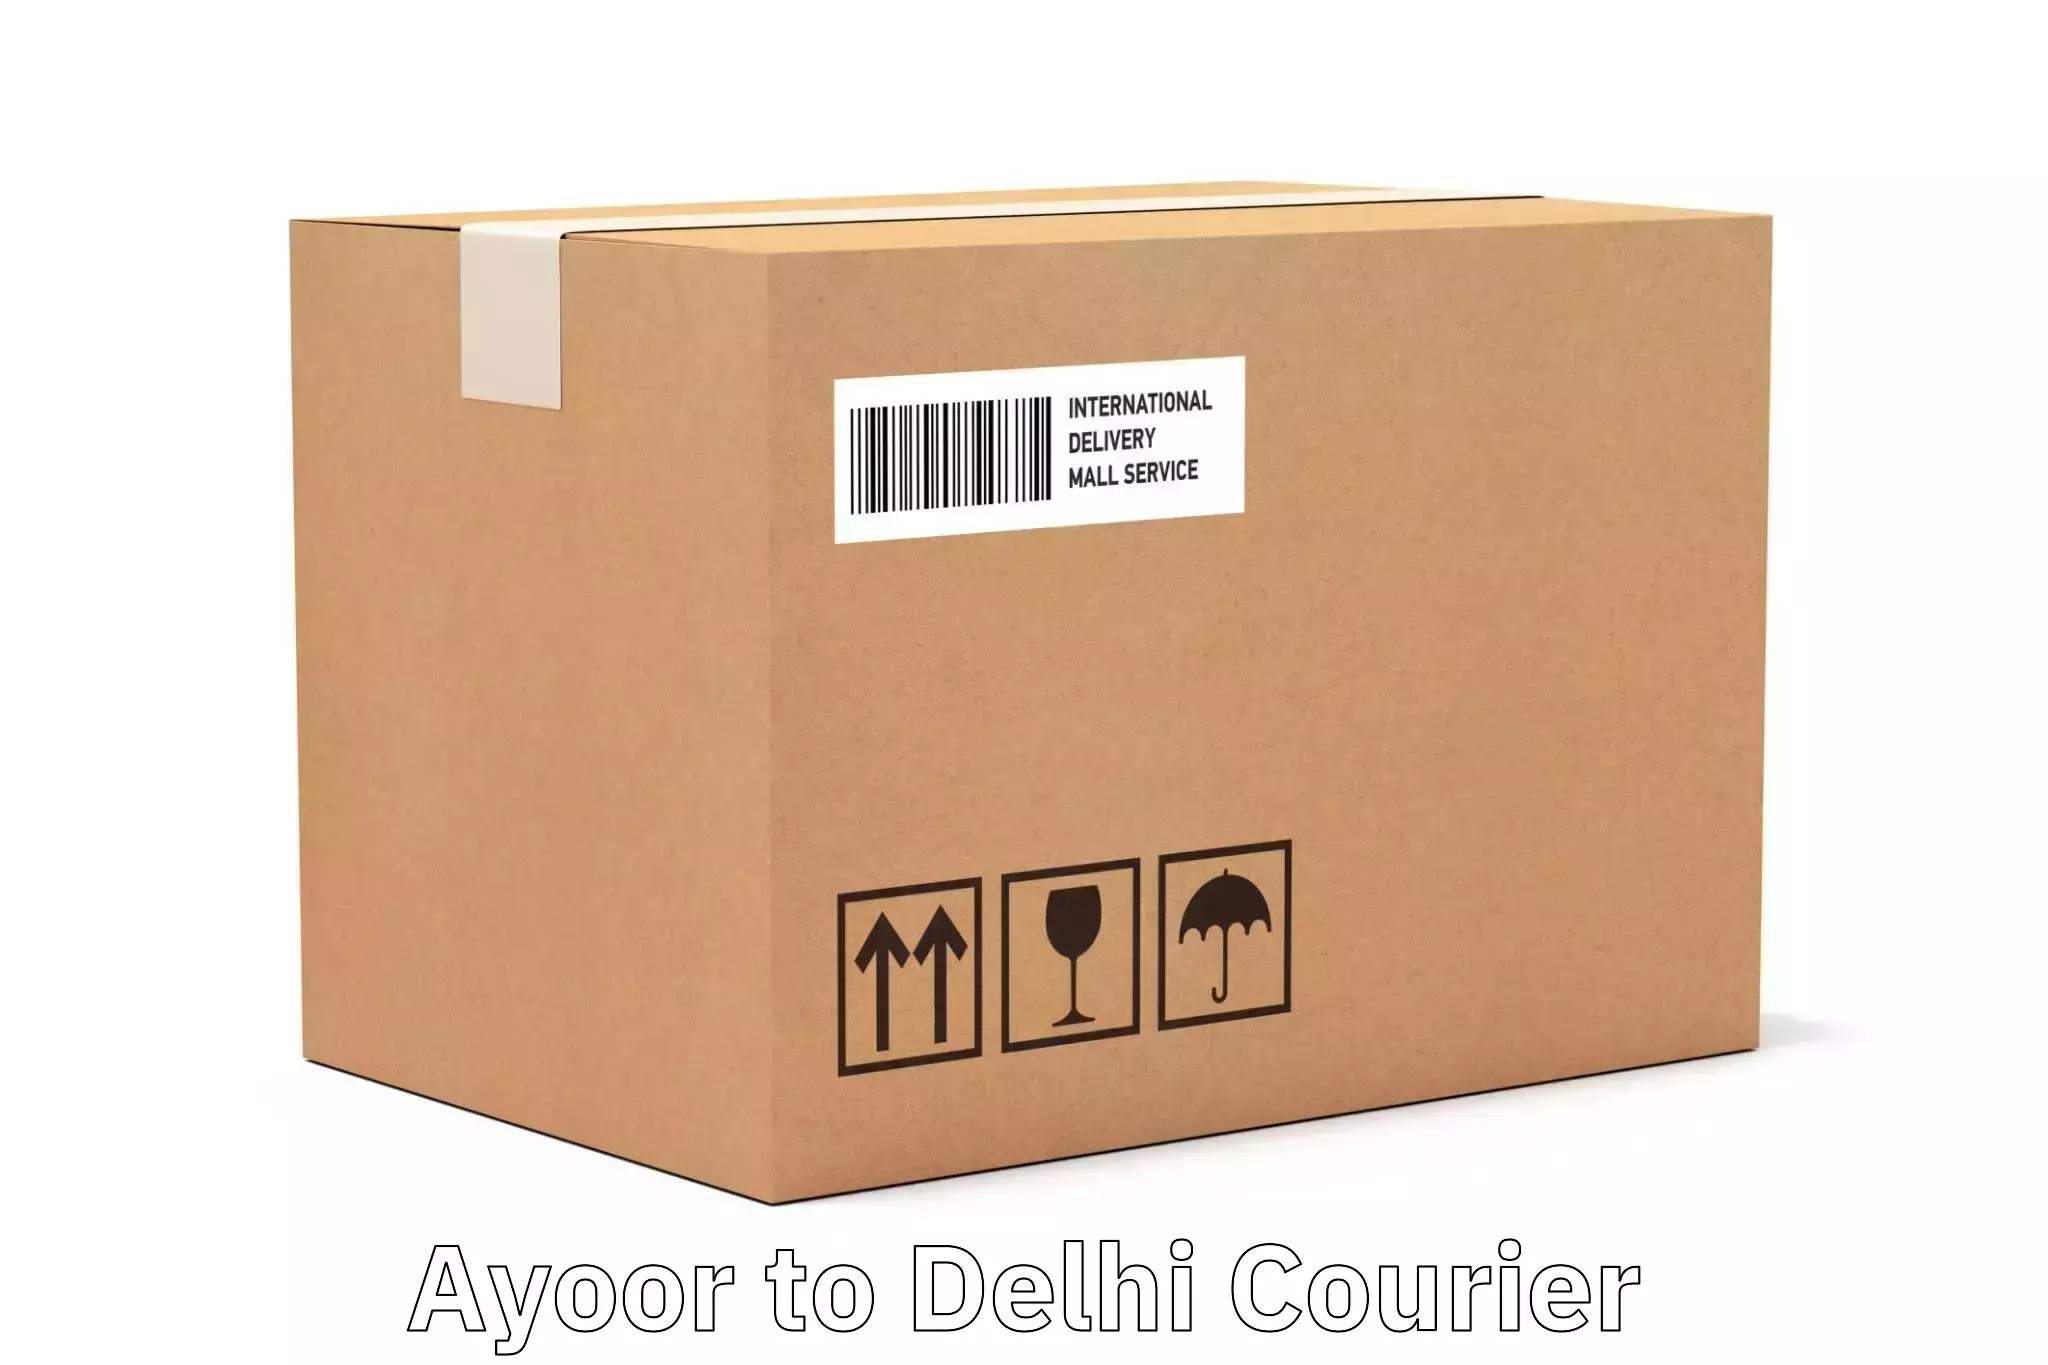 Express delivery capabilities Ayoor to Kalkaji